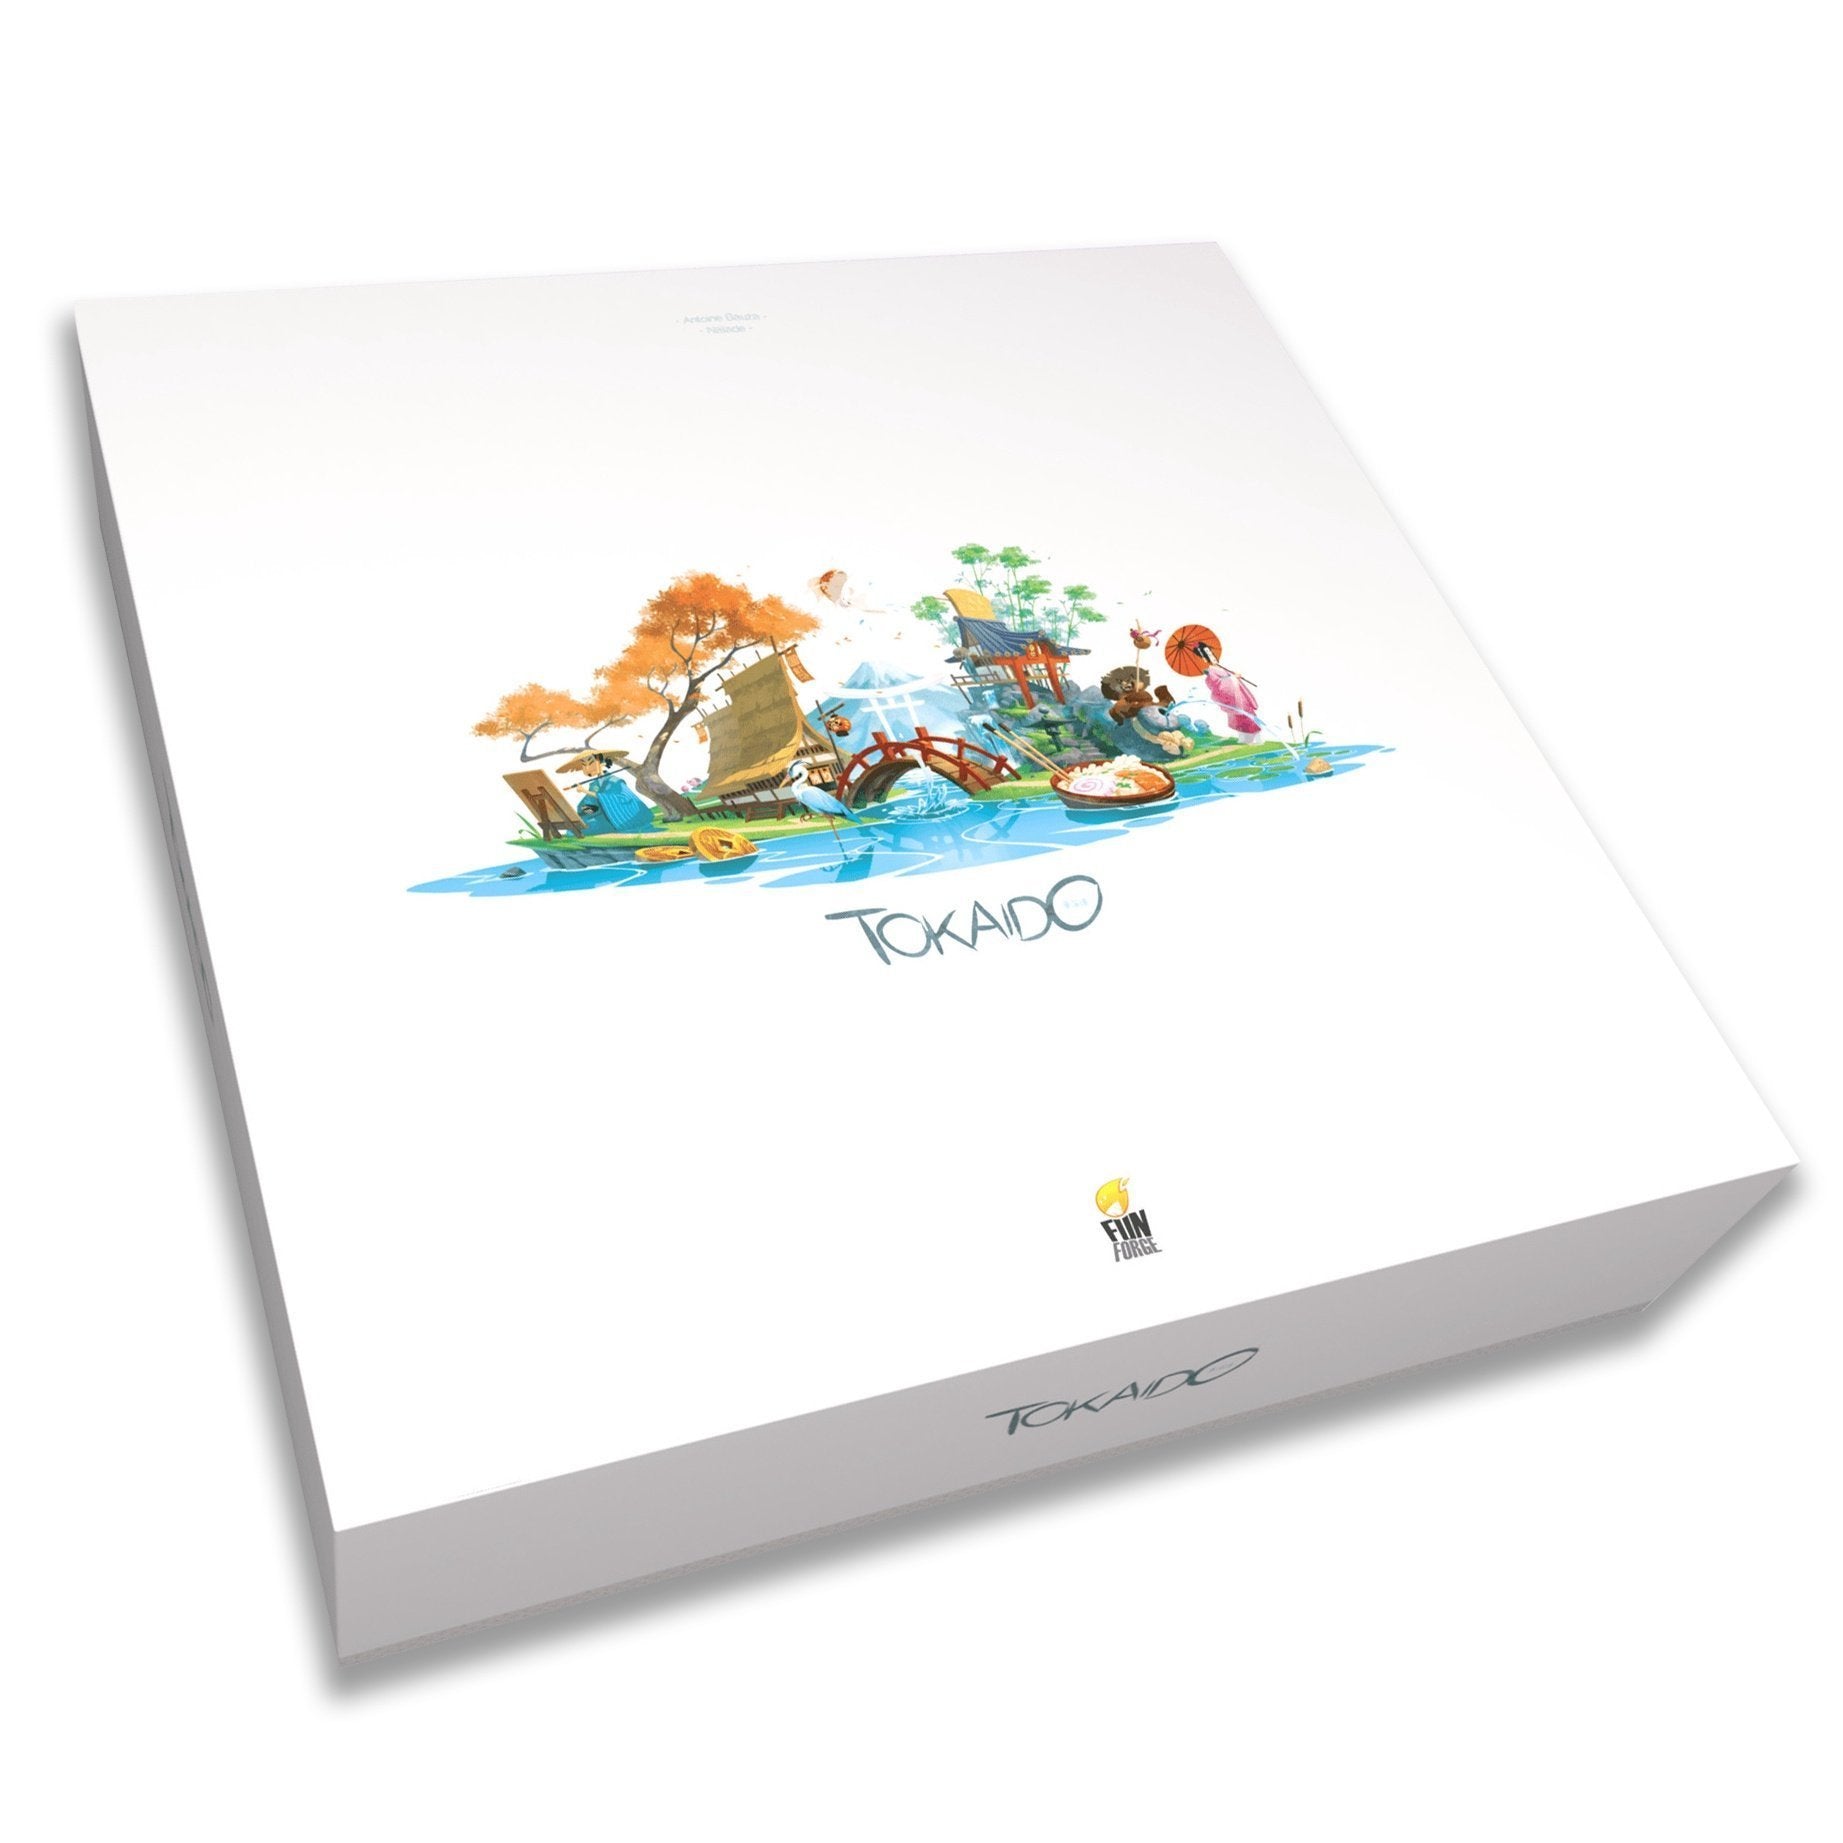 Tokaido 5th Anniversary Edition - Good Games